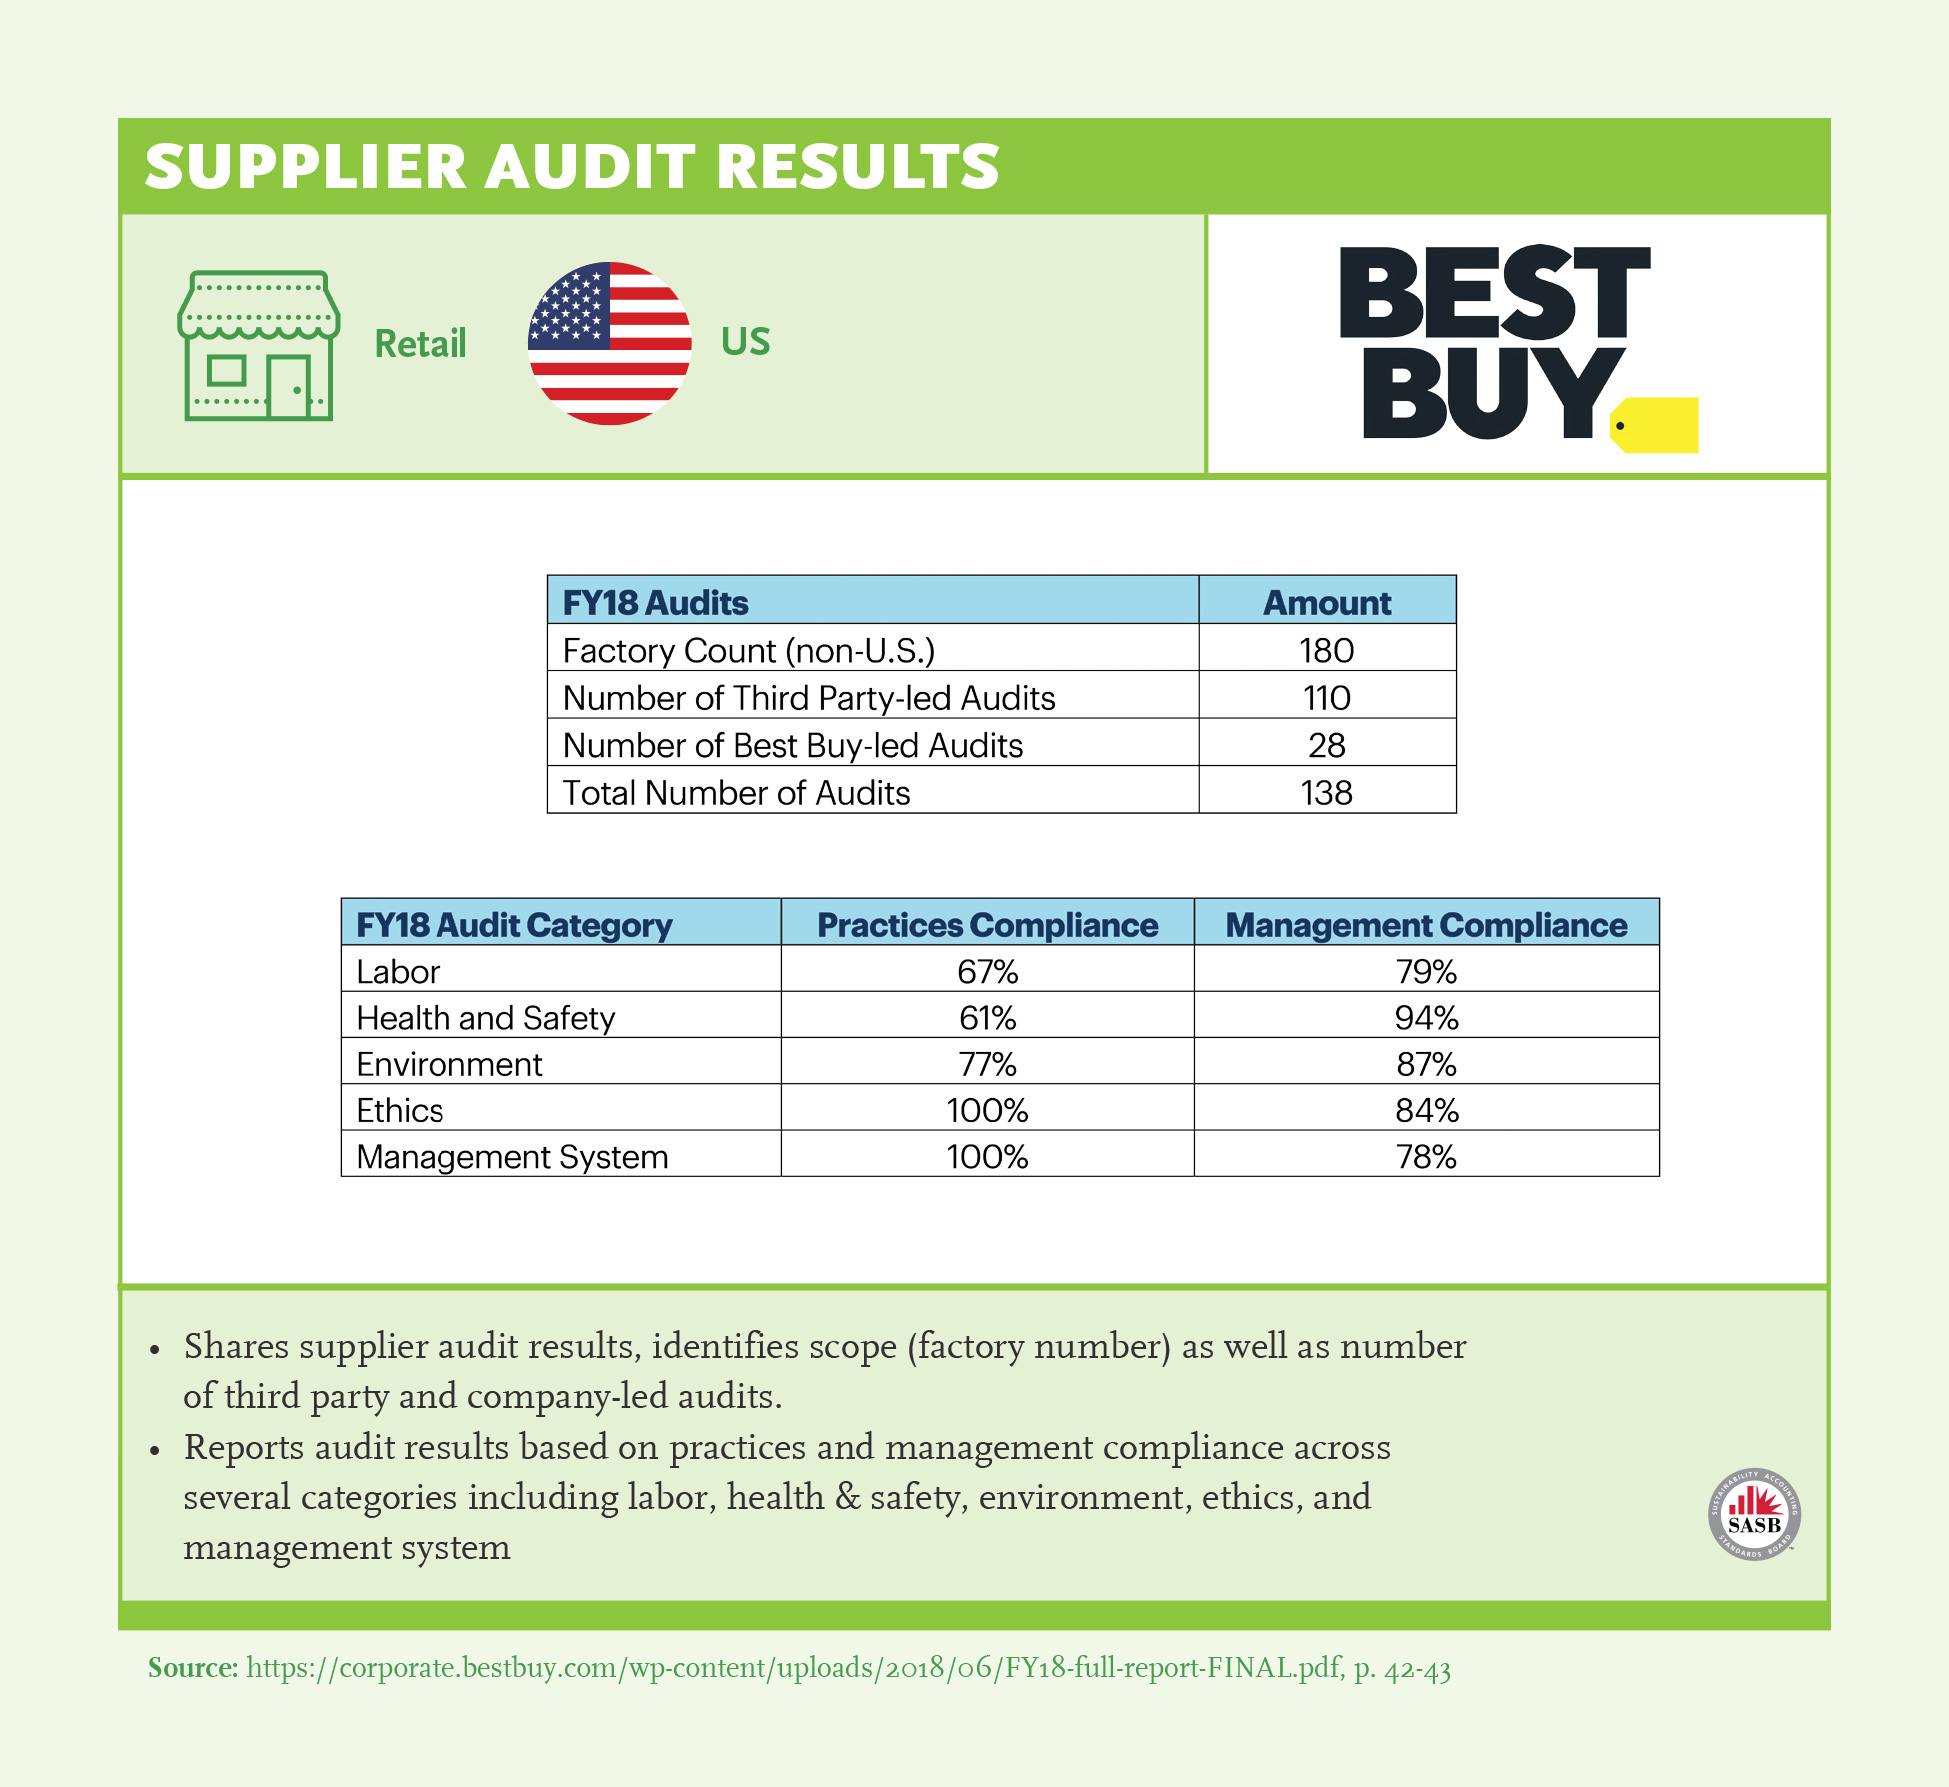 Supplier Audit Results: Best Buy